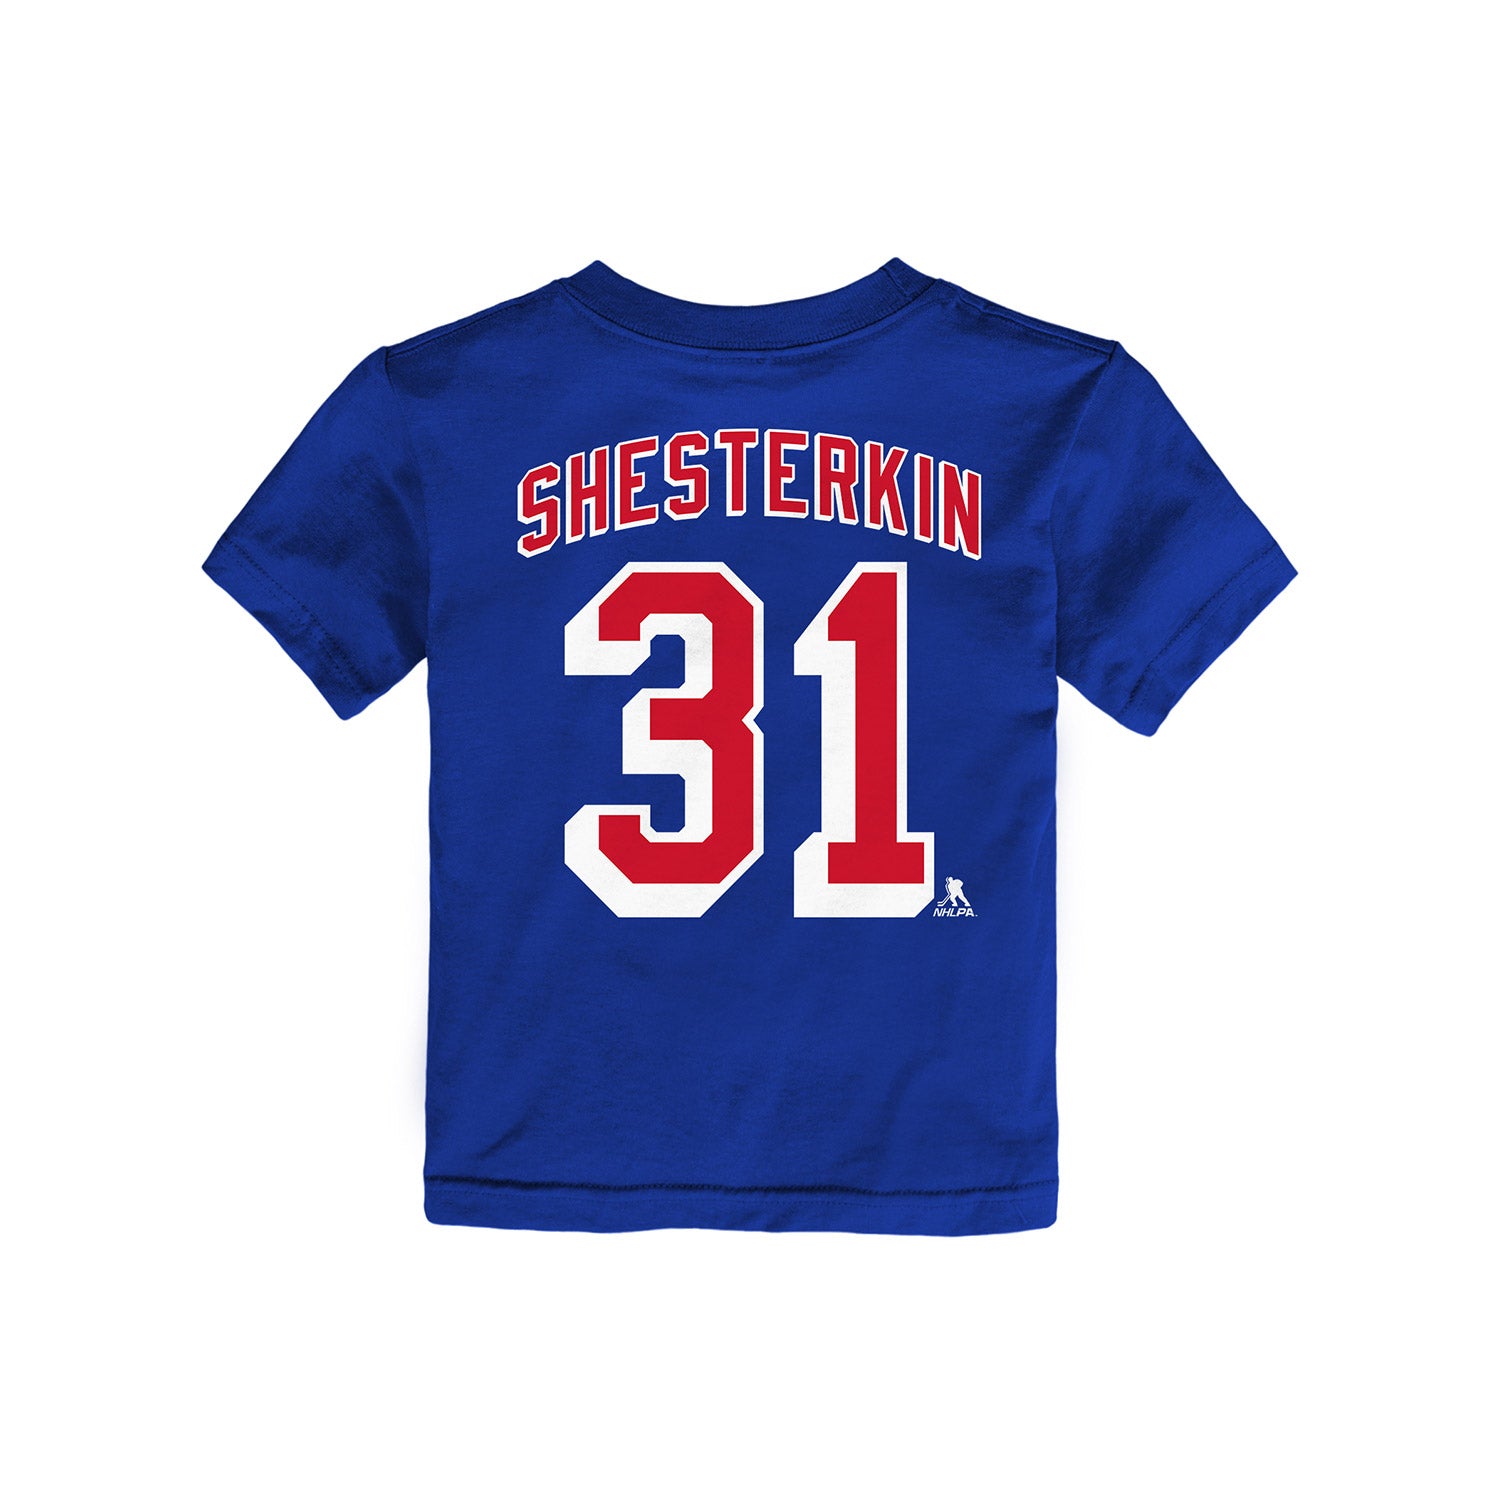  Igor Shesterkin Toddler Shirt (Toddler Shirt, 2T